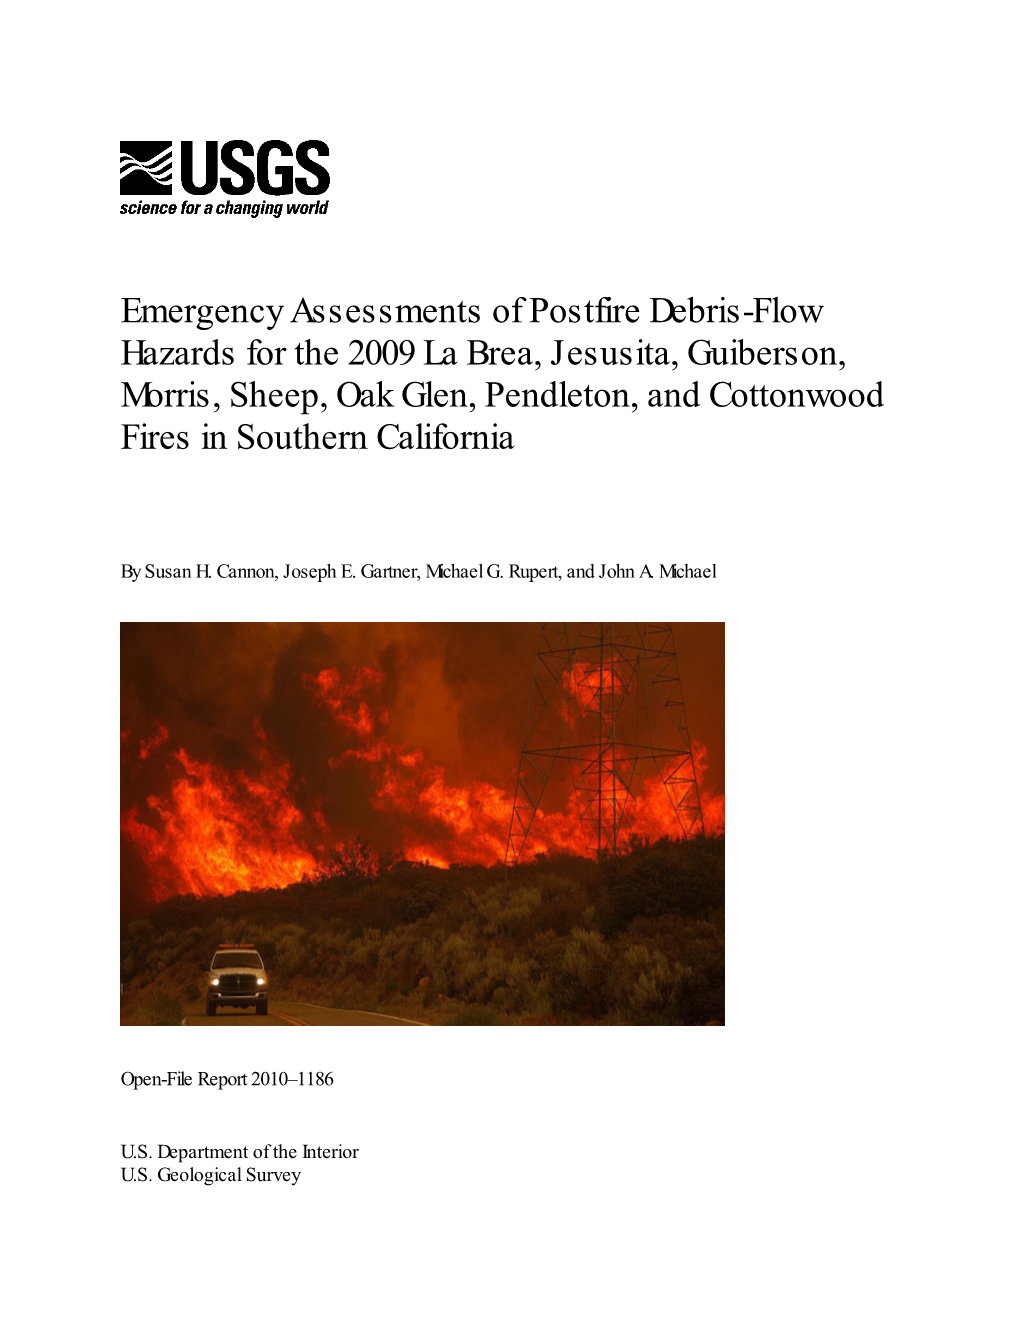 Emergency Assessments of Postfire Debris-Flow Hazards for the 2009